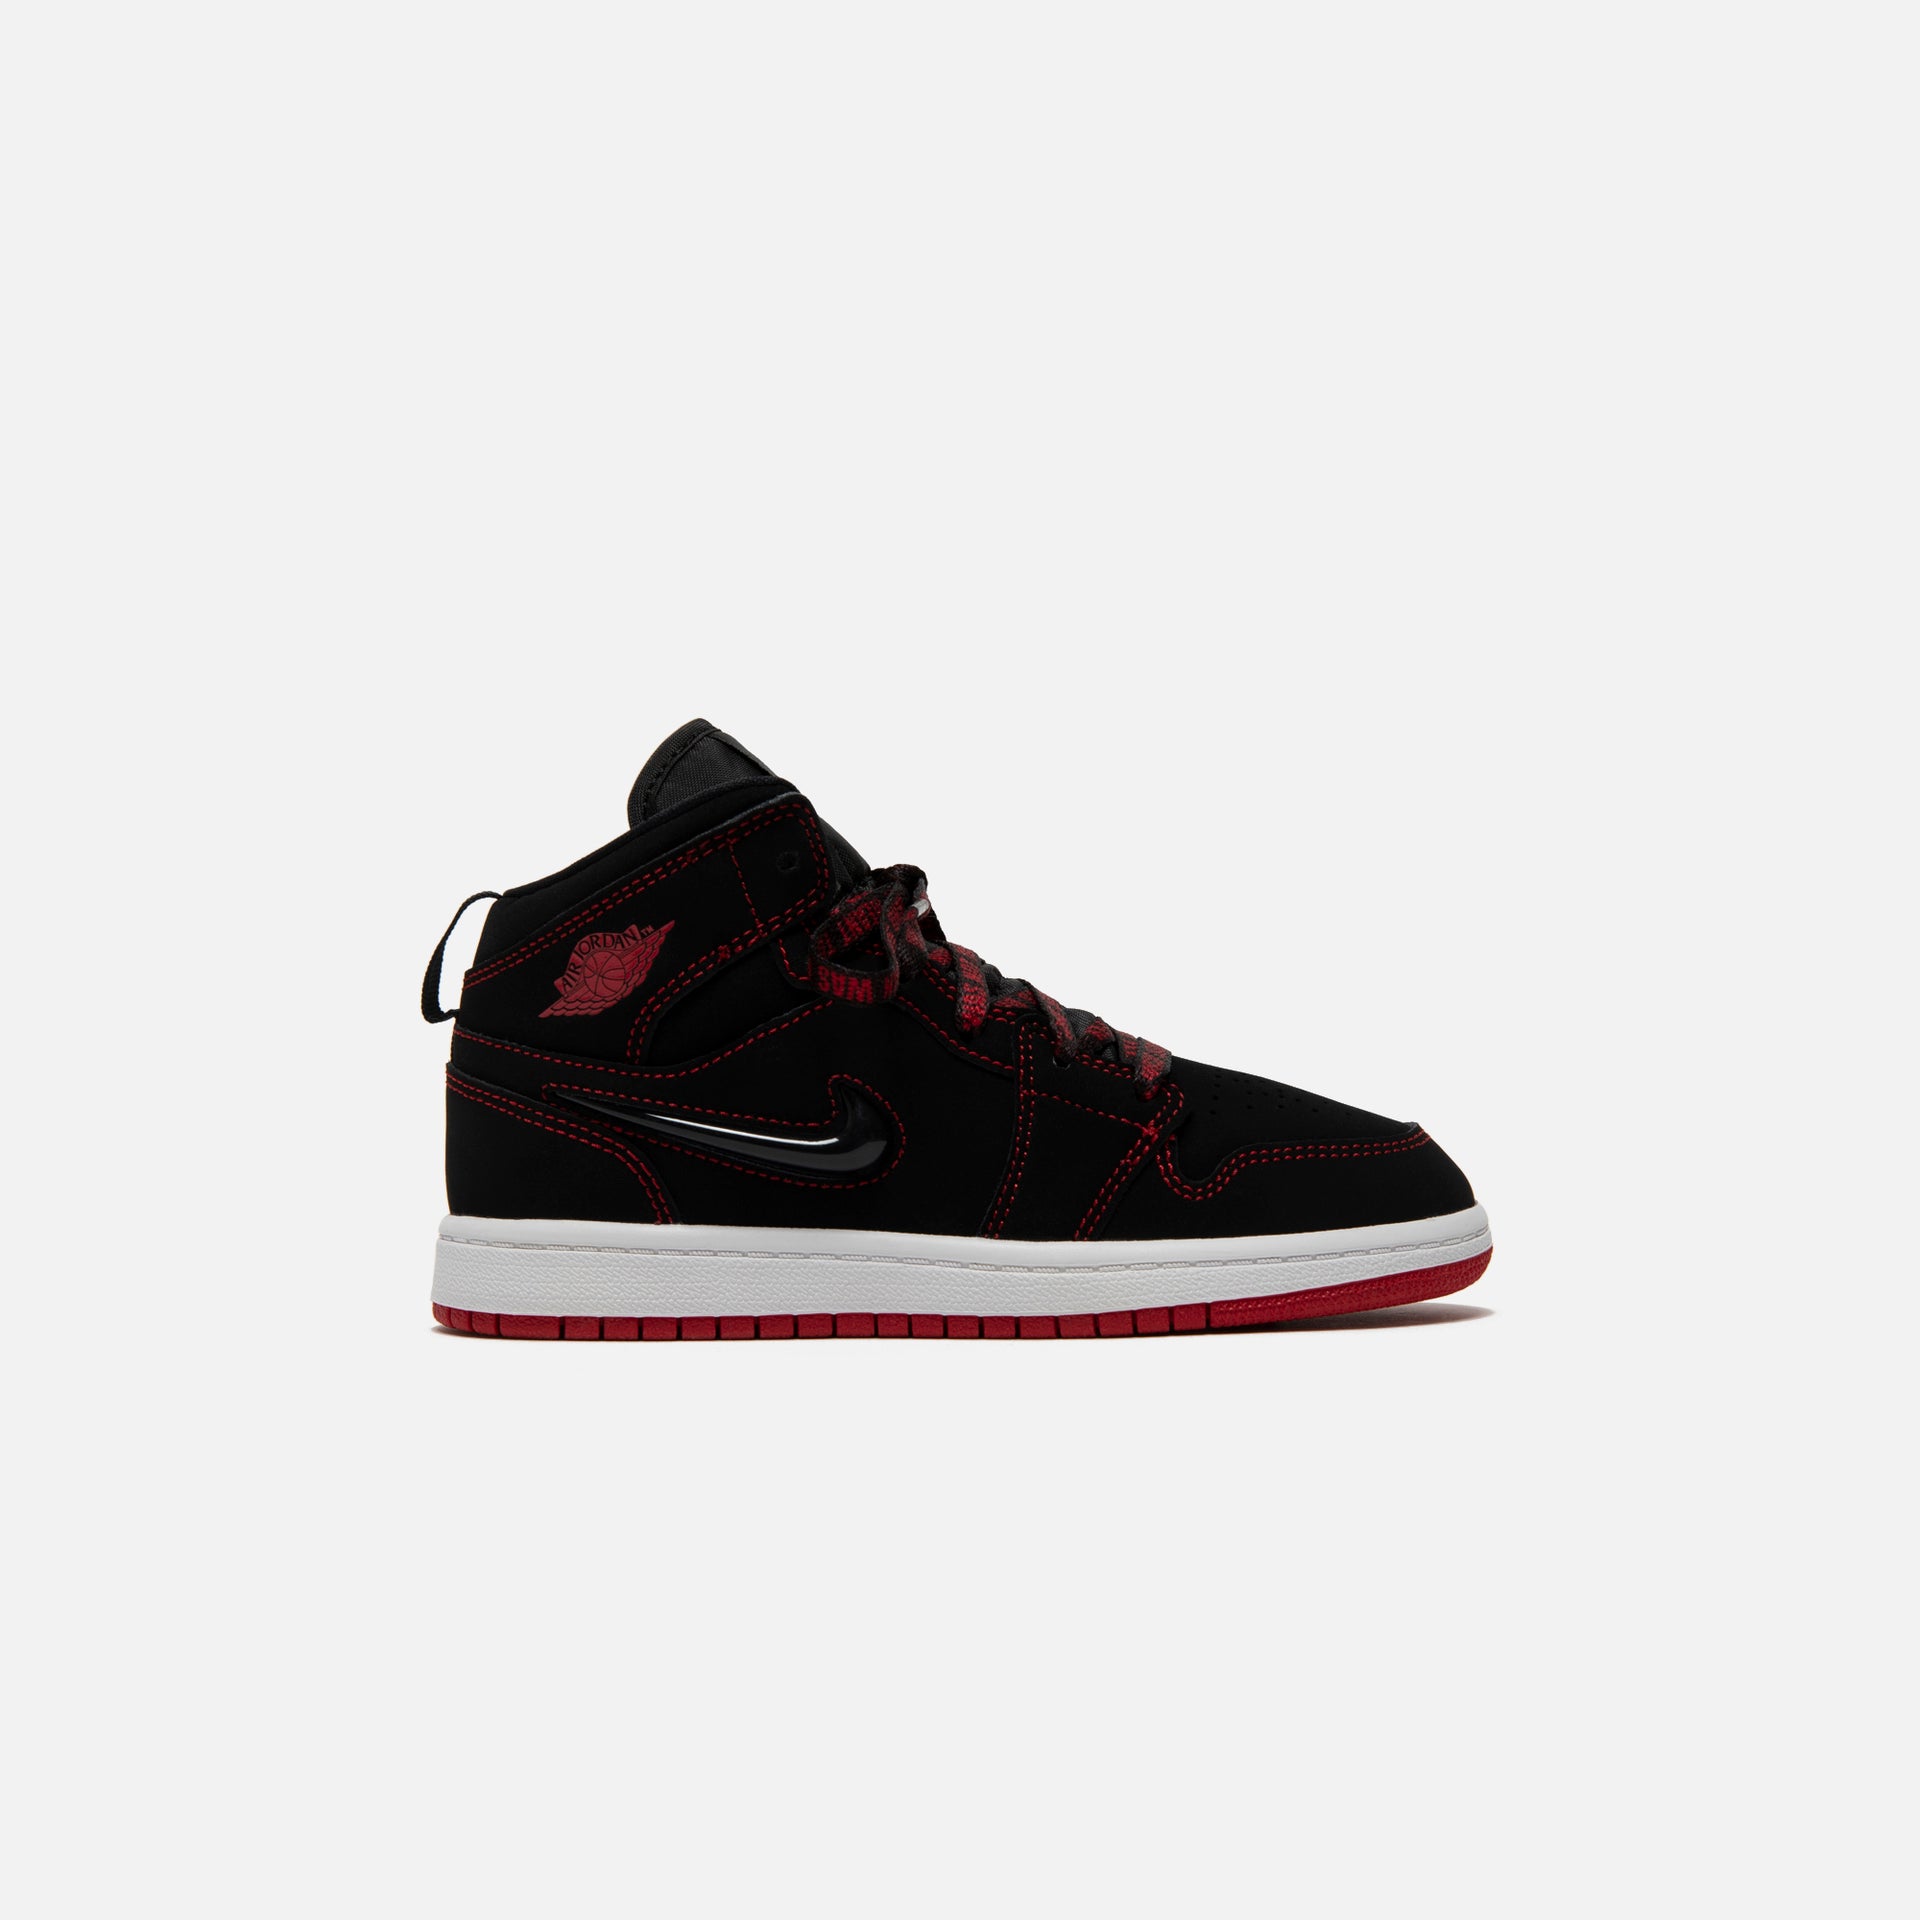 Nike Air Jordan Pre-School Mid SE - White / Black / Gym Red